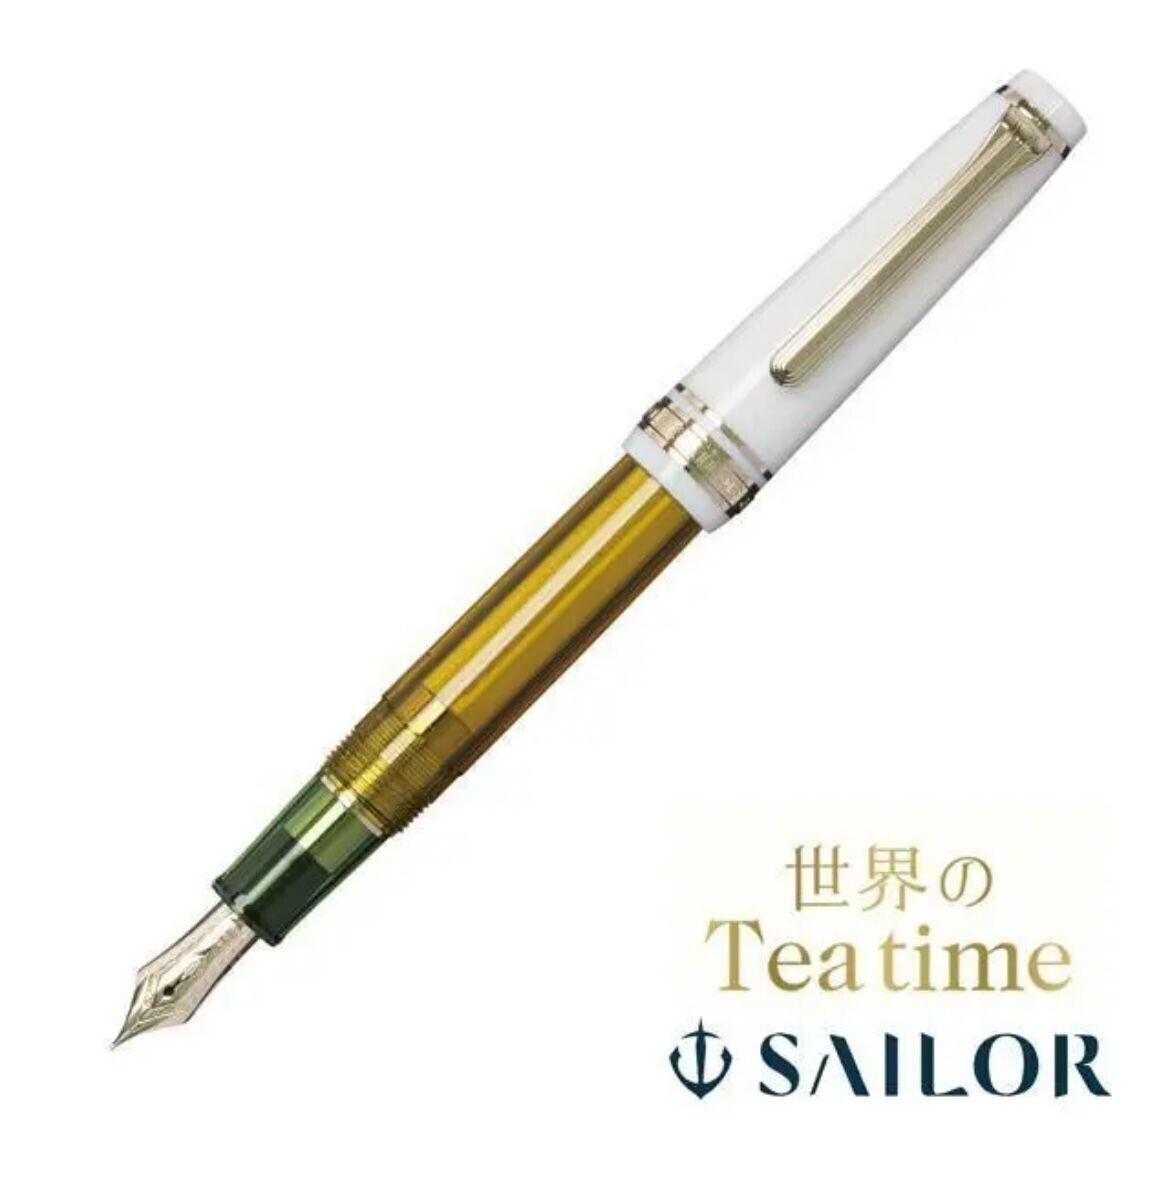 SAILOR Fountain Pen WORLD TEA TIME #3 MOROCCAN MINT TEA MINT & SUGAR Nib MF NEW